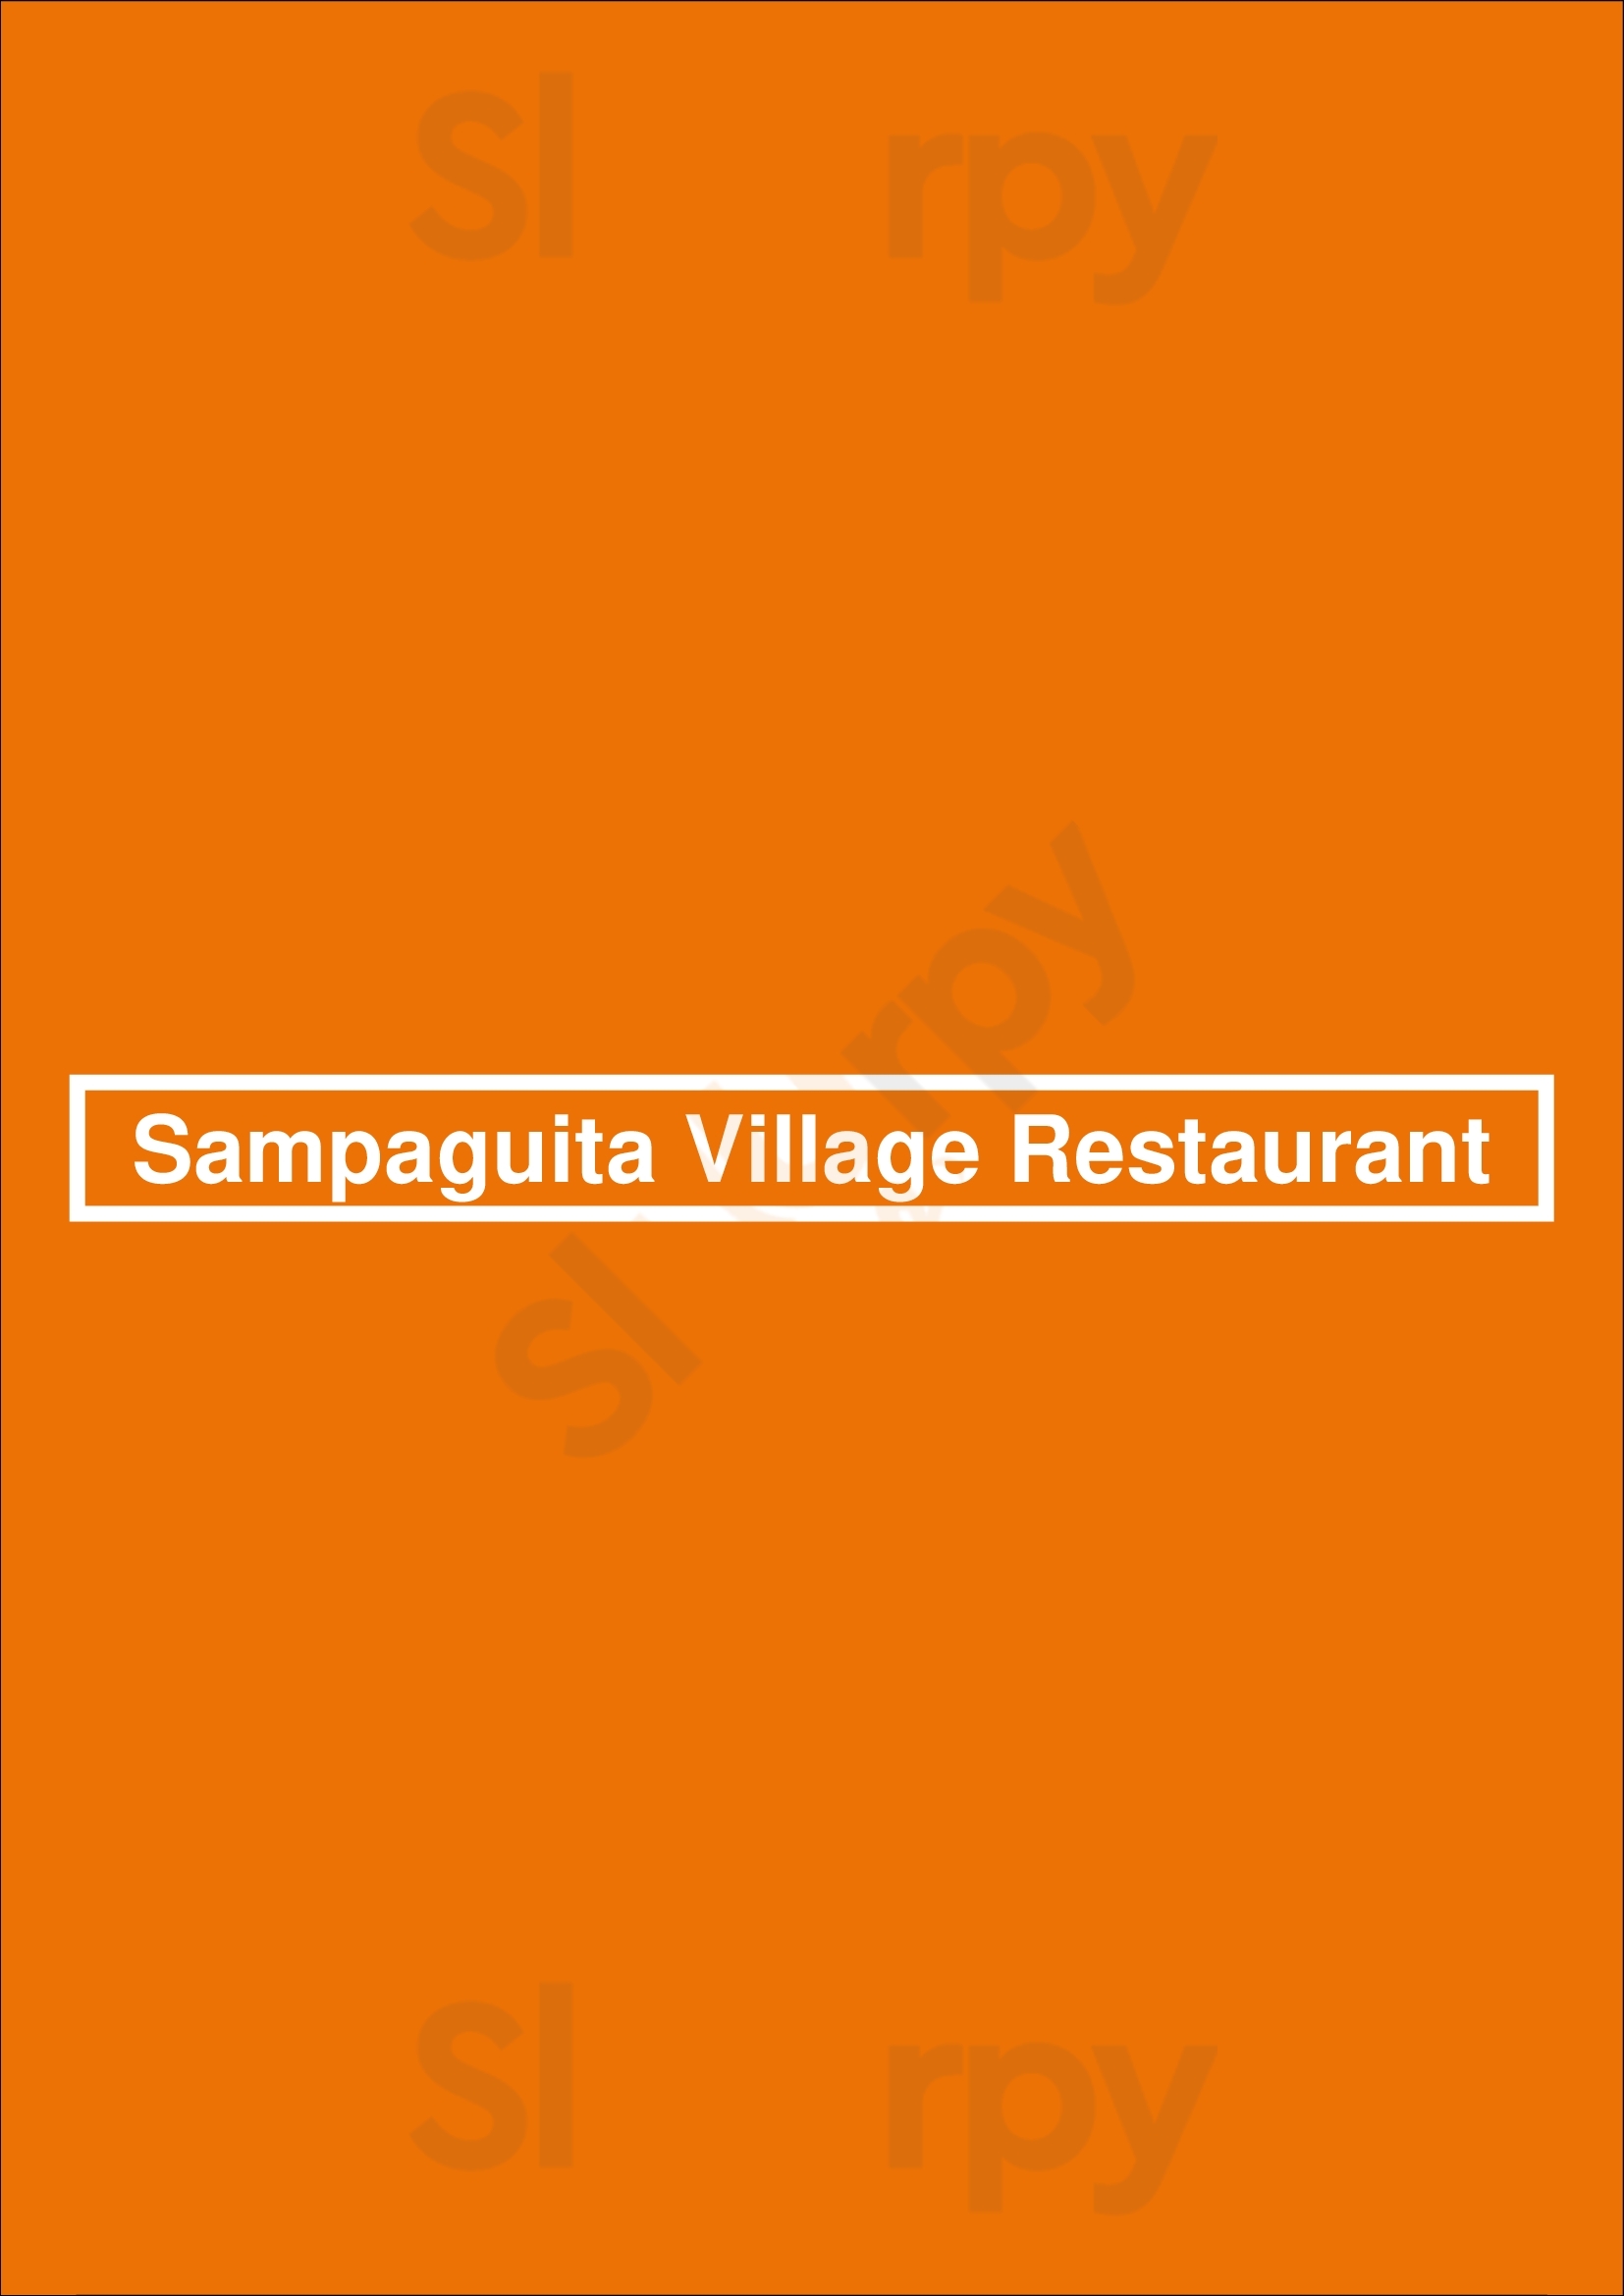 Sampaguita Village Restaurant Toronto Menu - 1